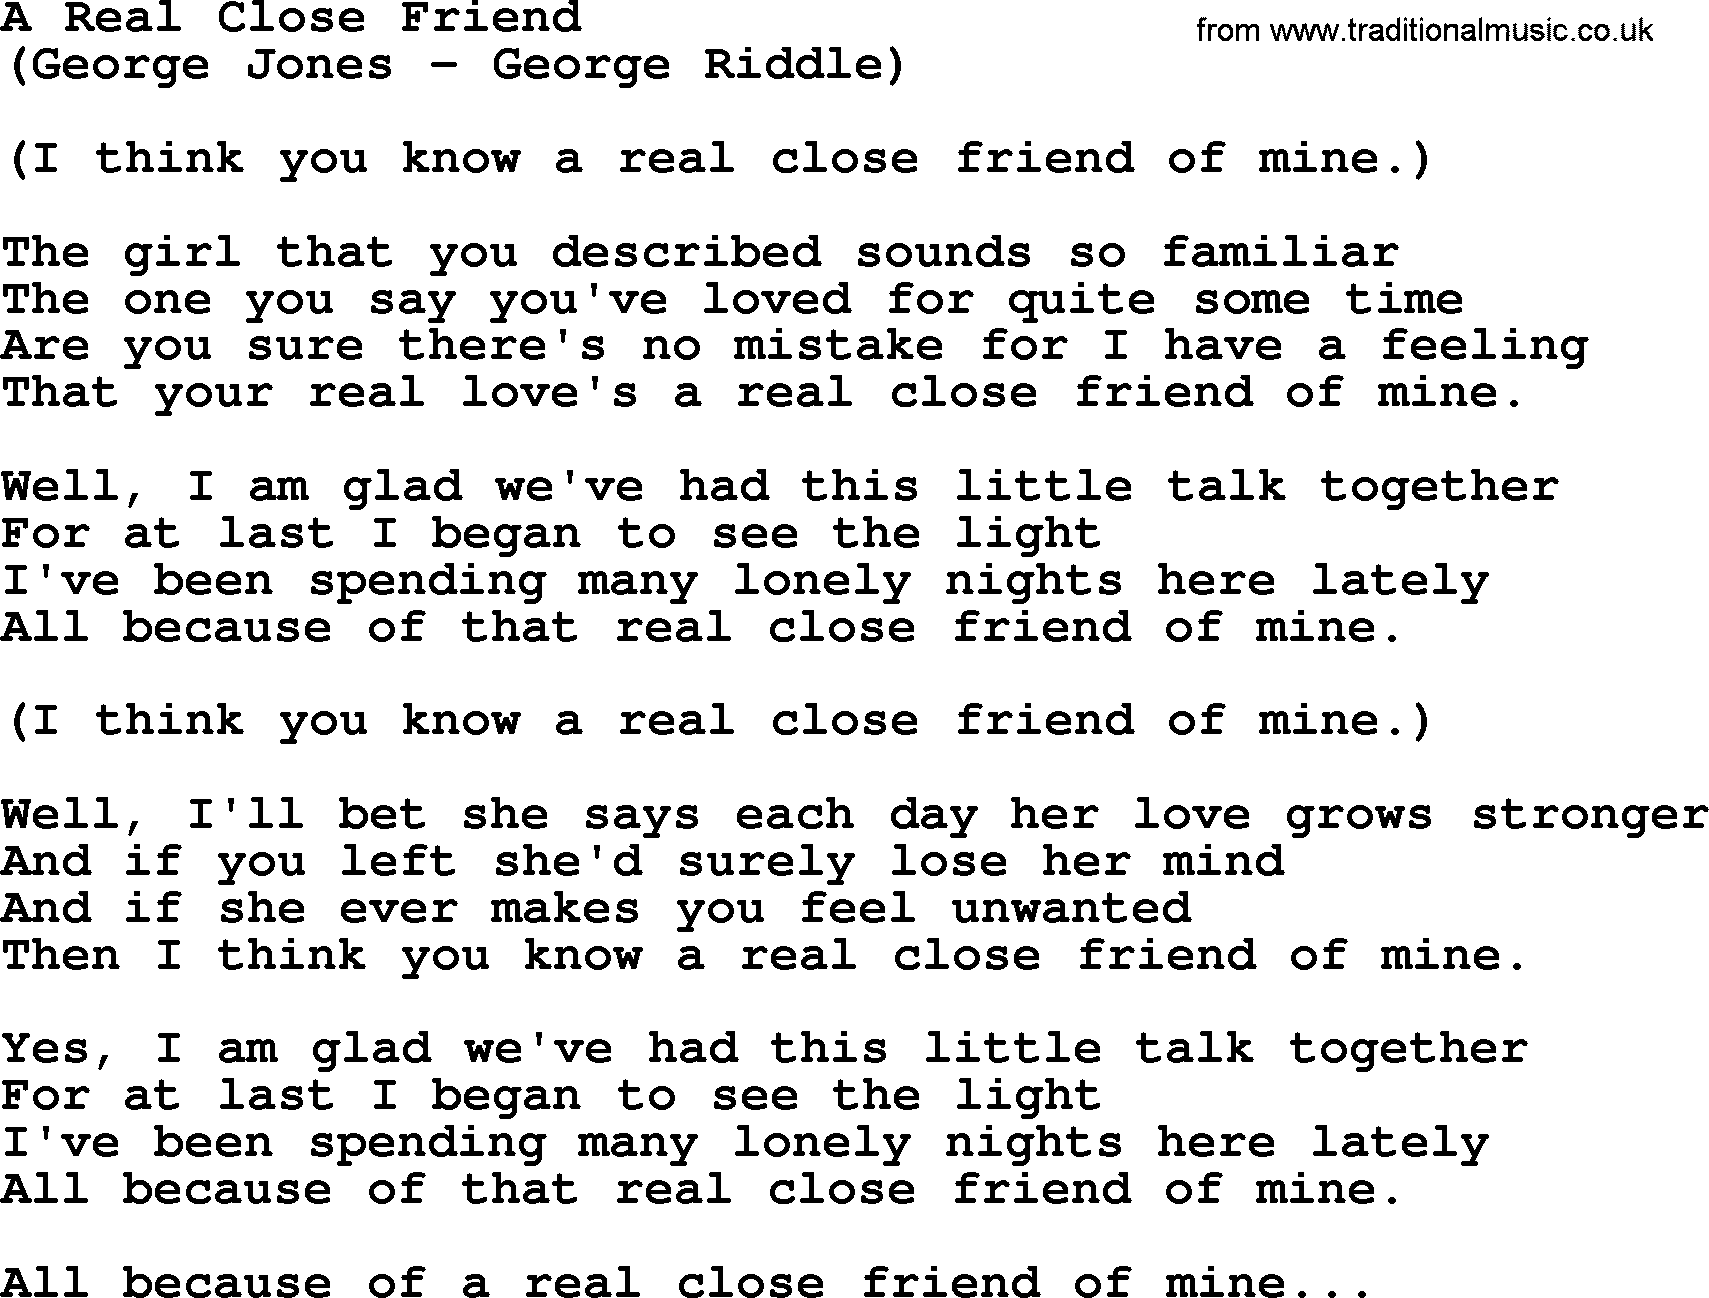 George Jones song: A Real Close Friend, lyrics